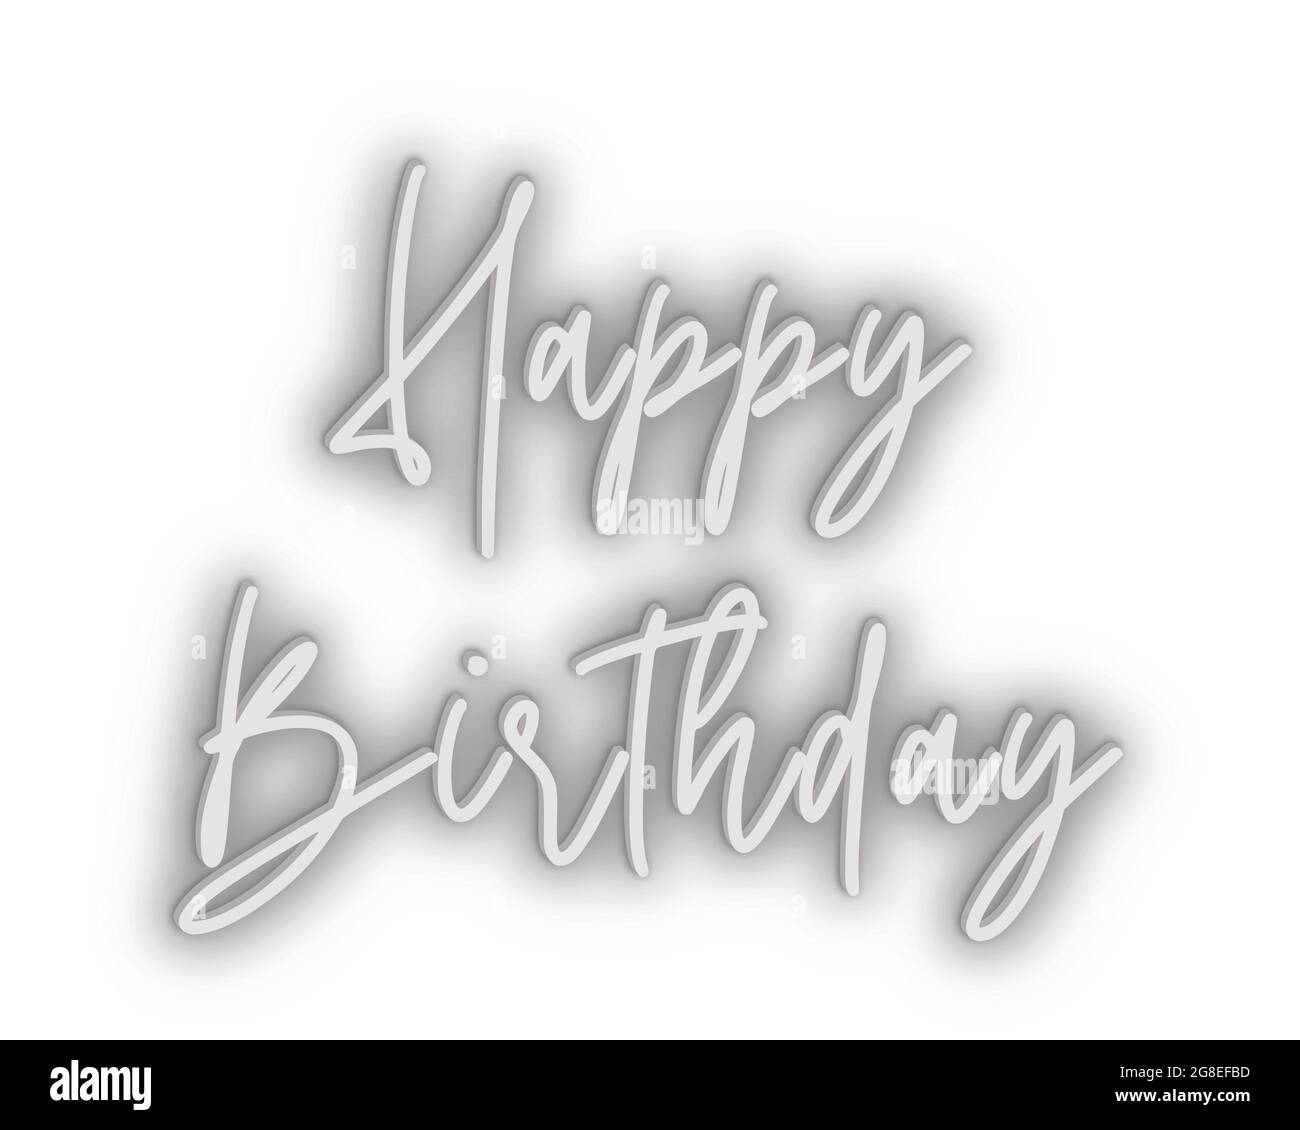 Happy birthday text art Stock Photo